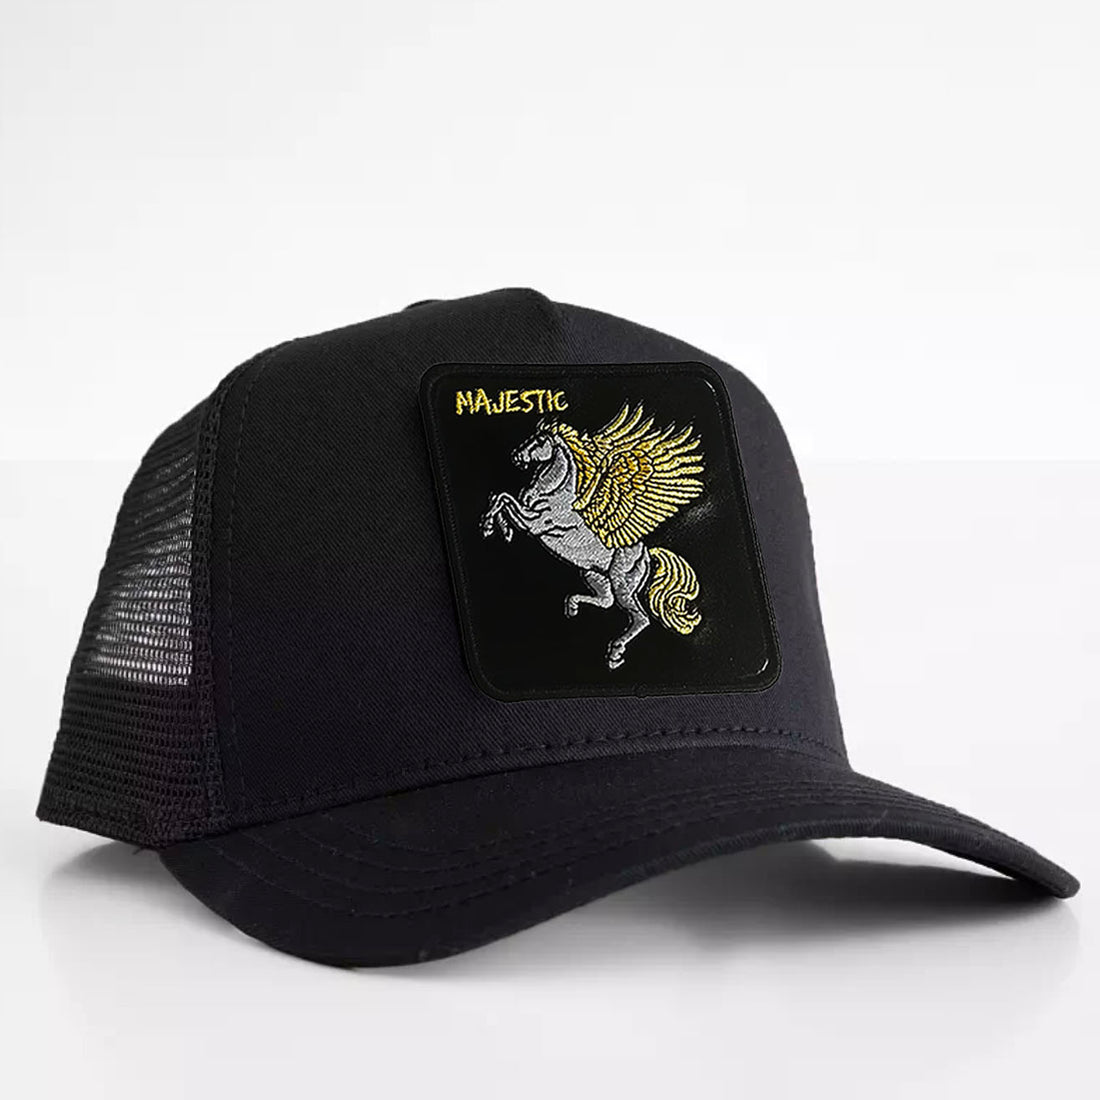 Pegasus - "Majestic" Trucker Hat - Black